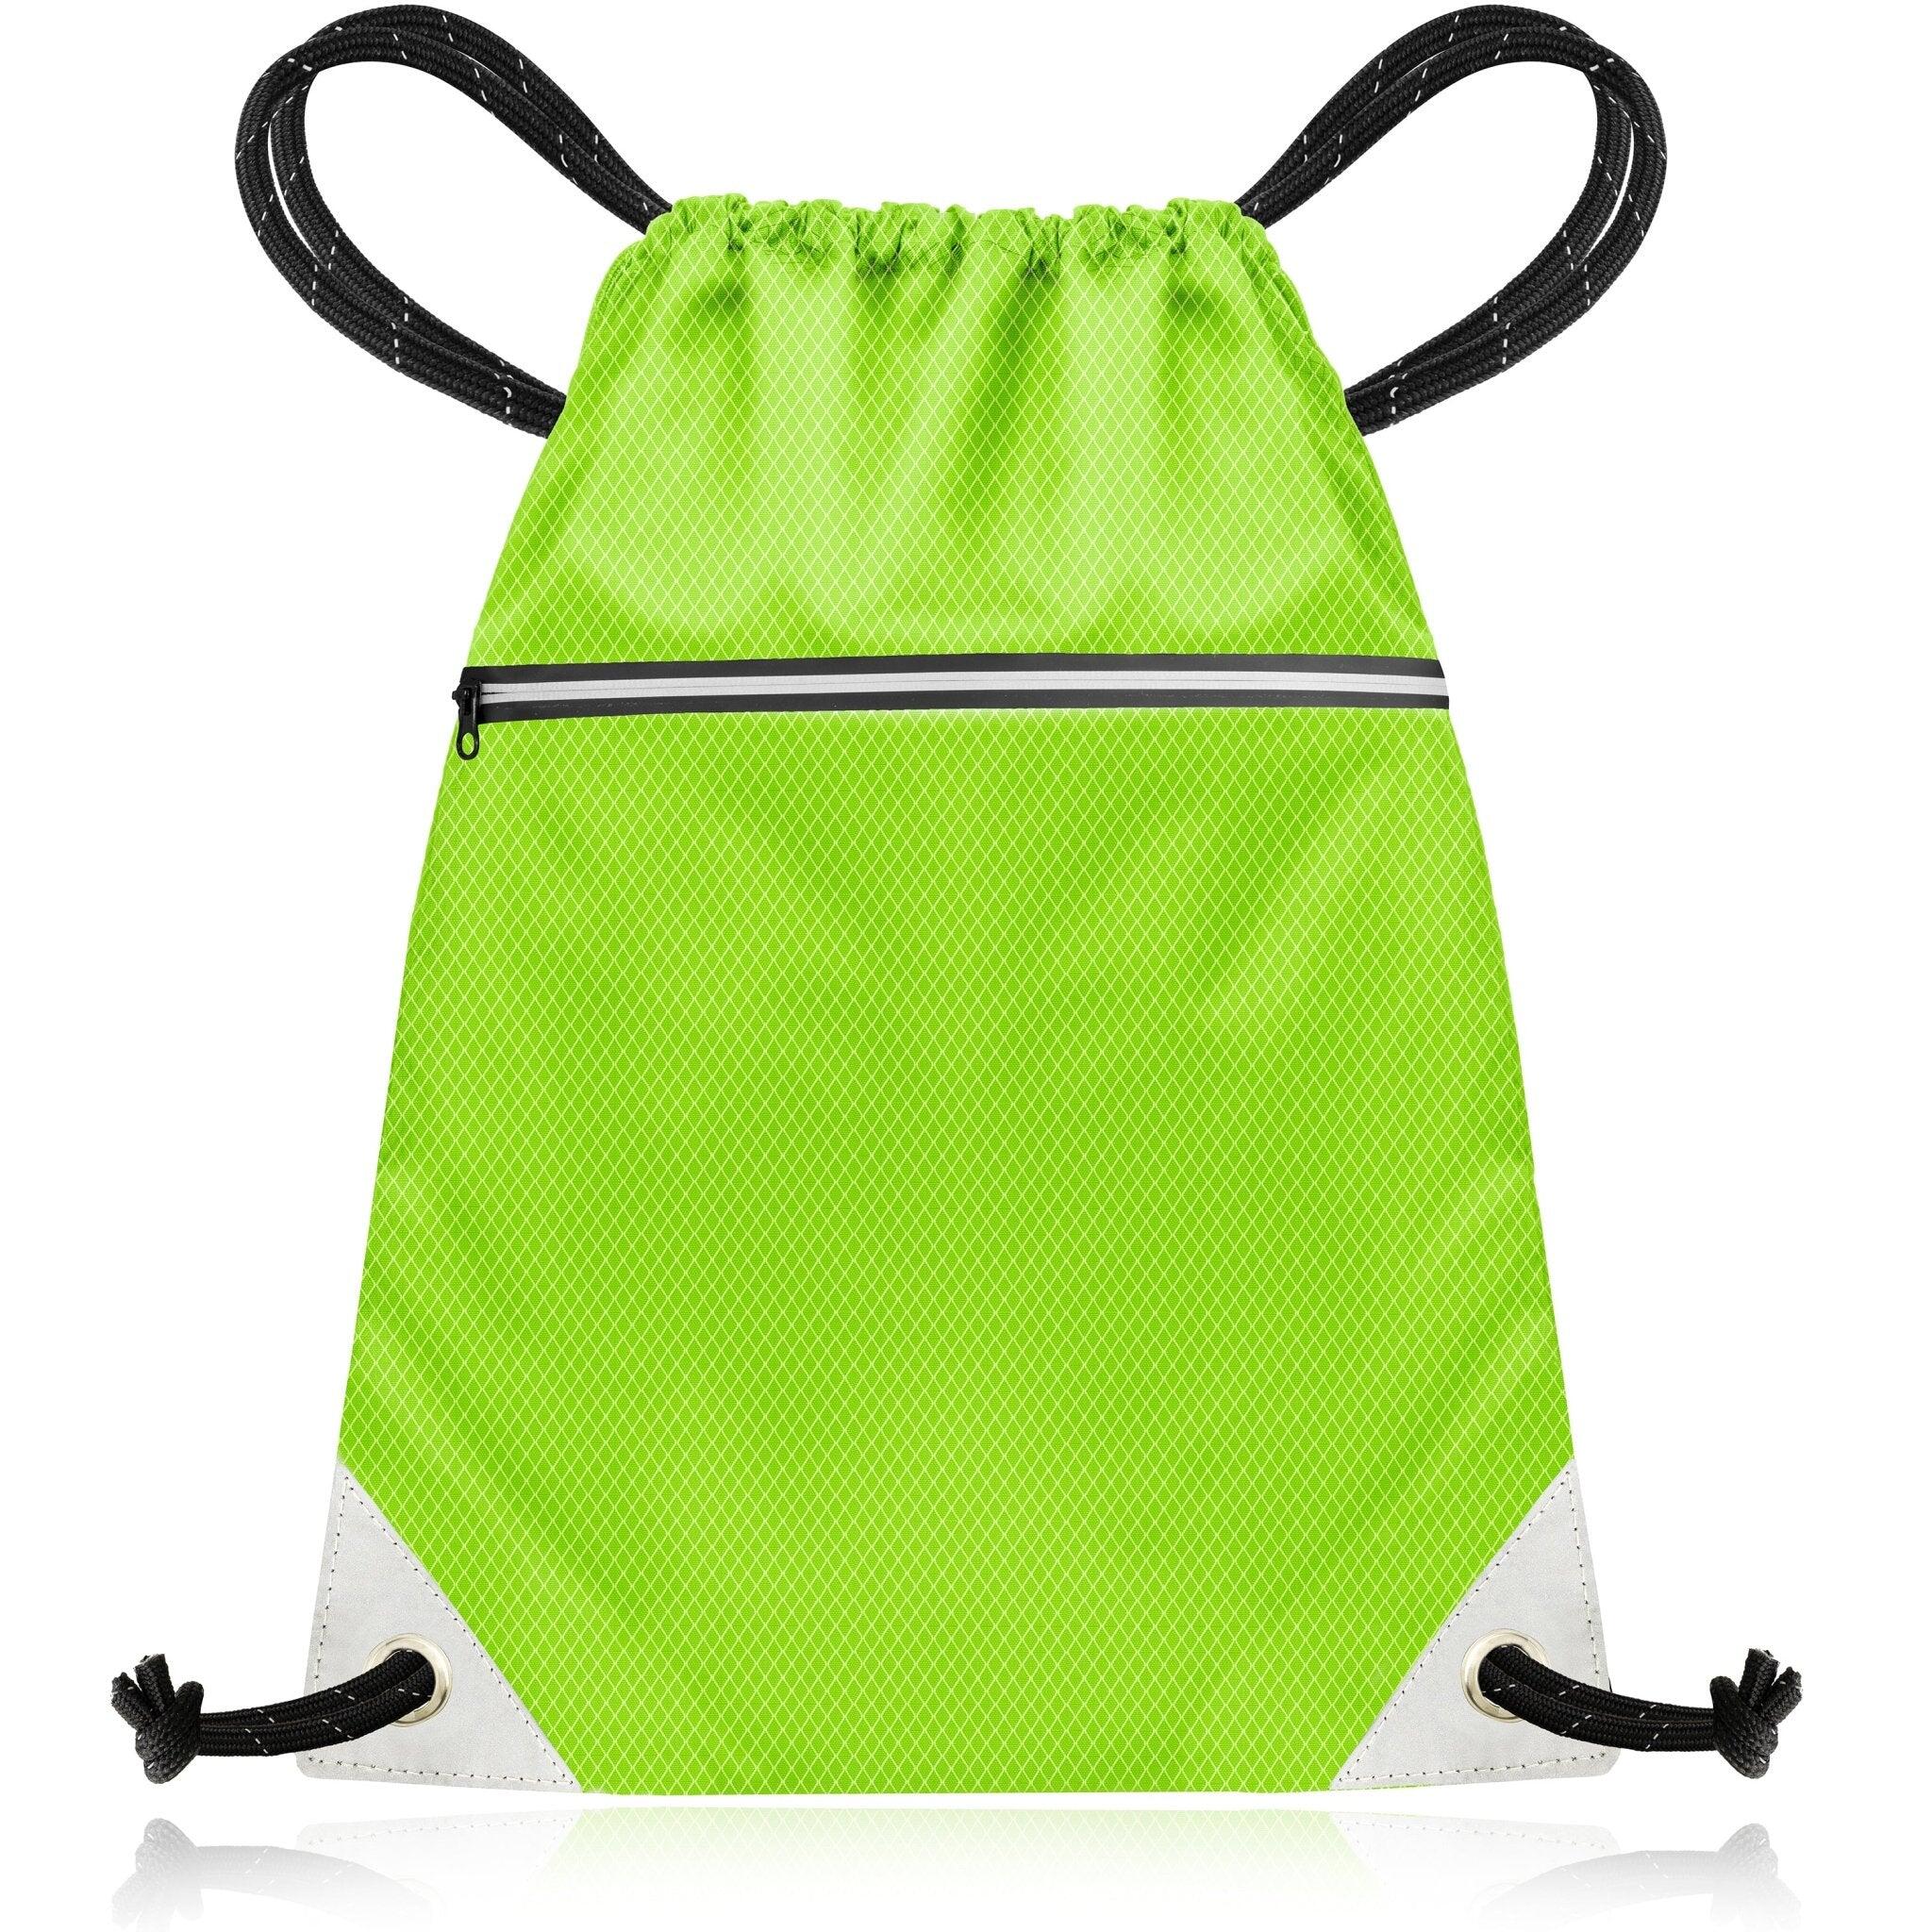 AZENGEAR Drawstring Gym Bag for Sport, PE, Swim, Beach, Yoga, Travel (Neon Green)